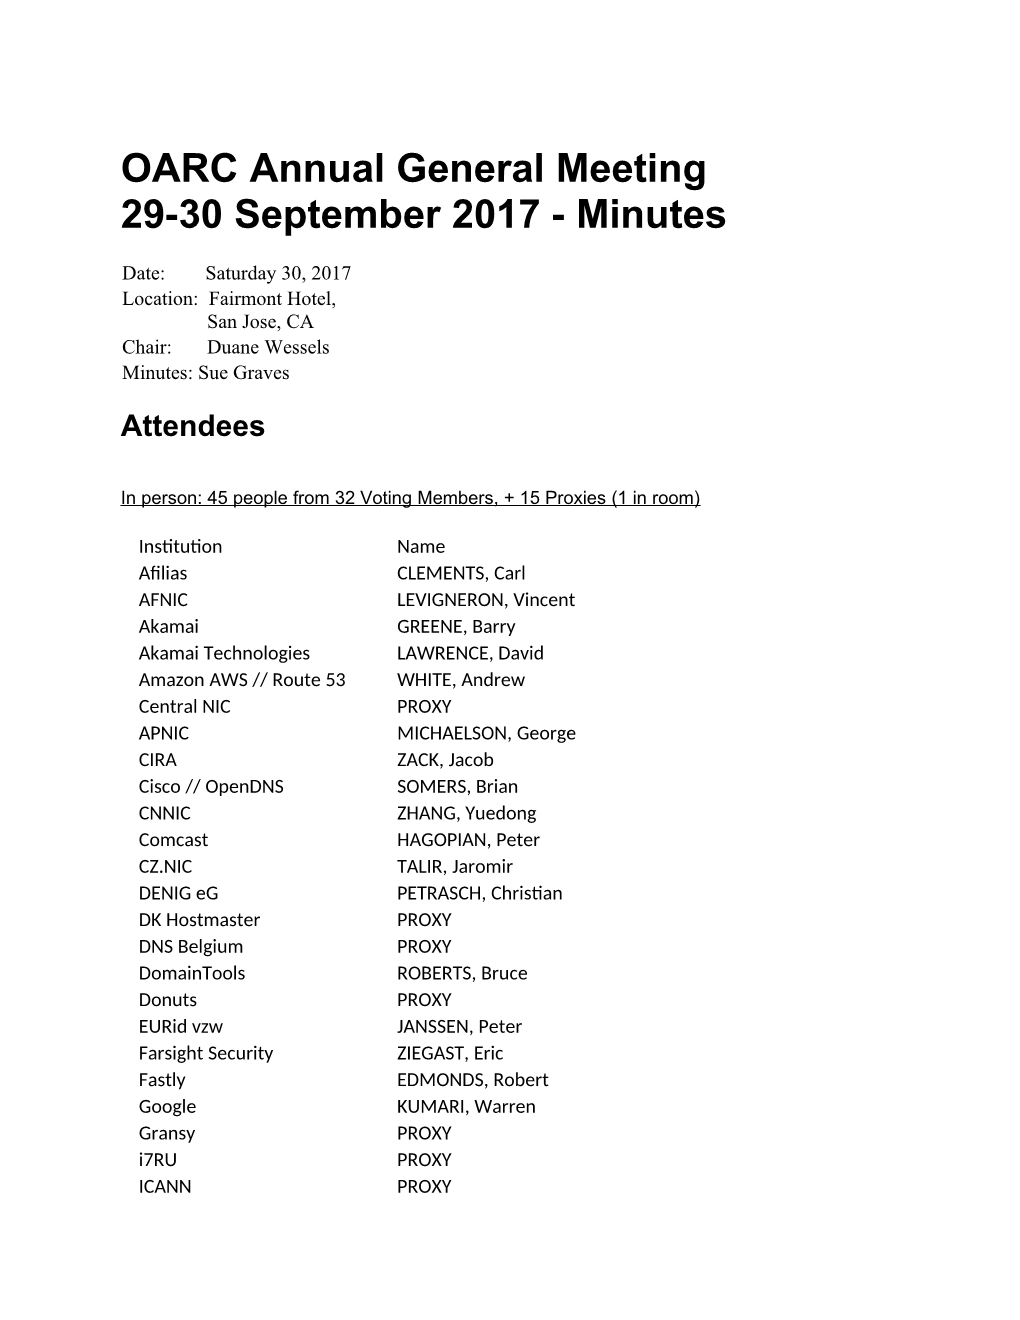 OARC 2017 AGM Minutes